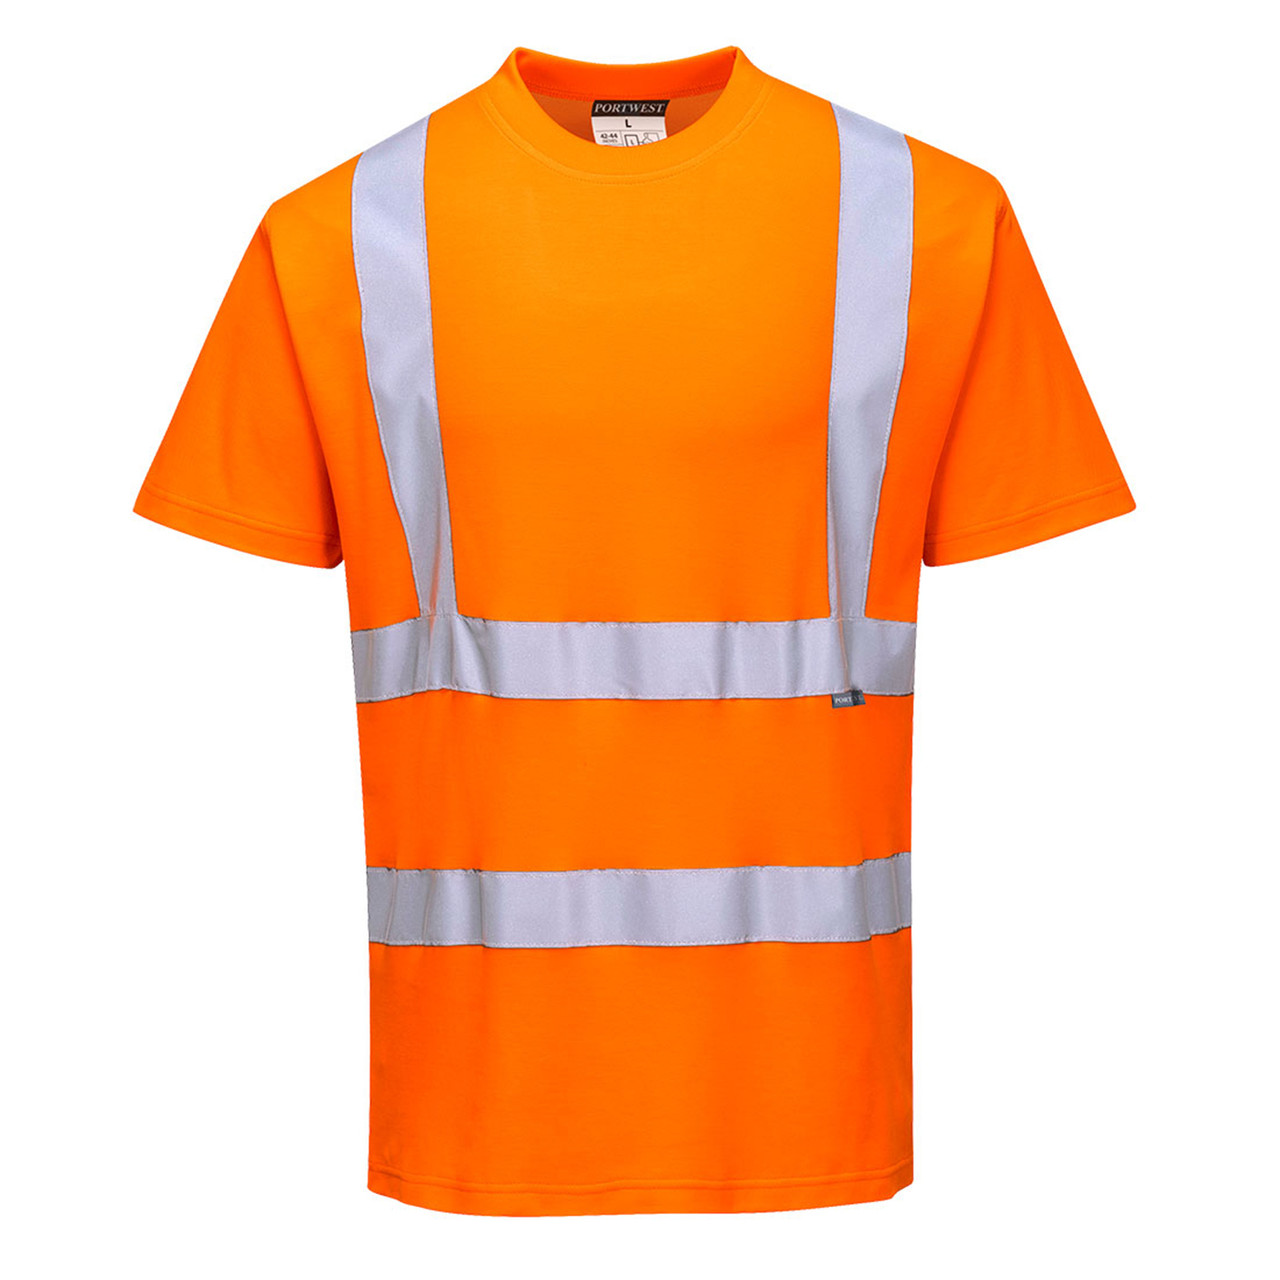 Portwest Austin Short-Sleeved T-Shirt Viz Visibility Reflective Safety Work Wear Top 